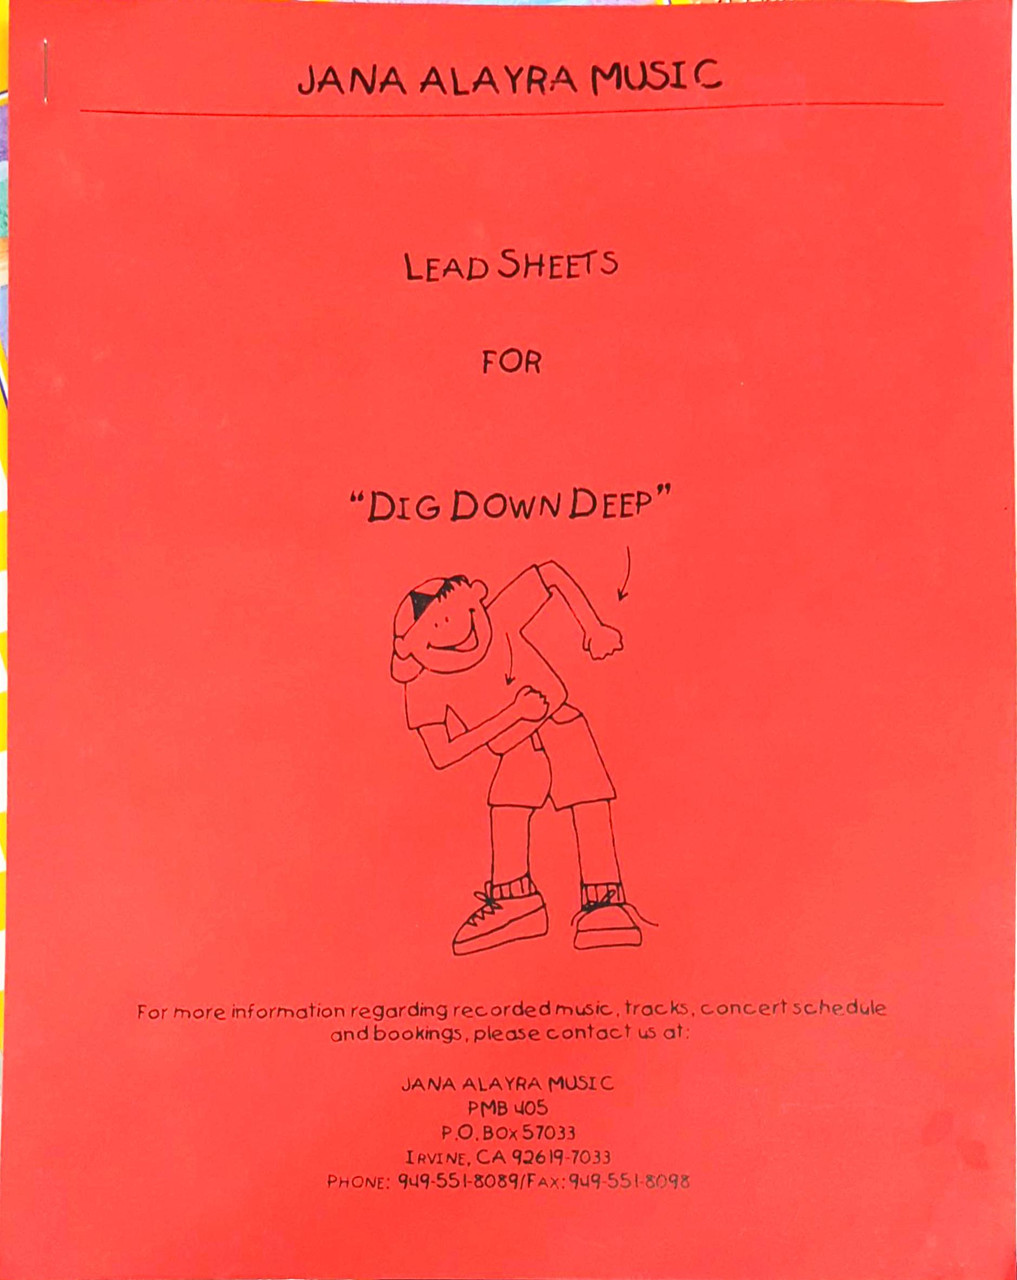 Dig Down Deep (lead sheets)